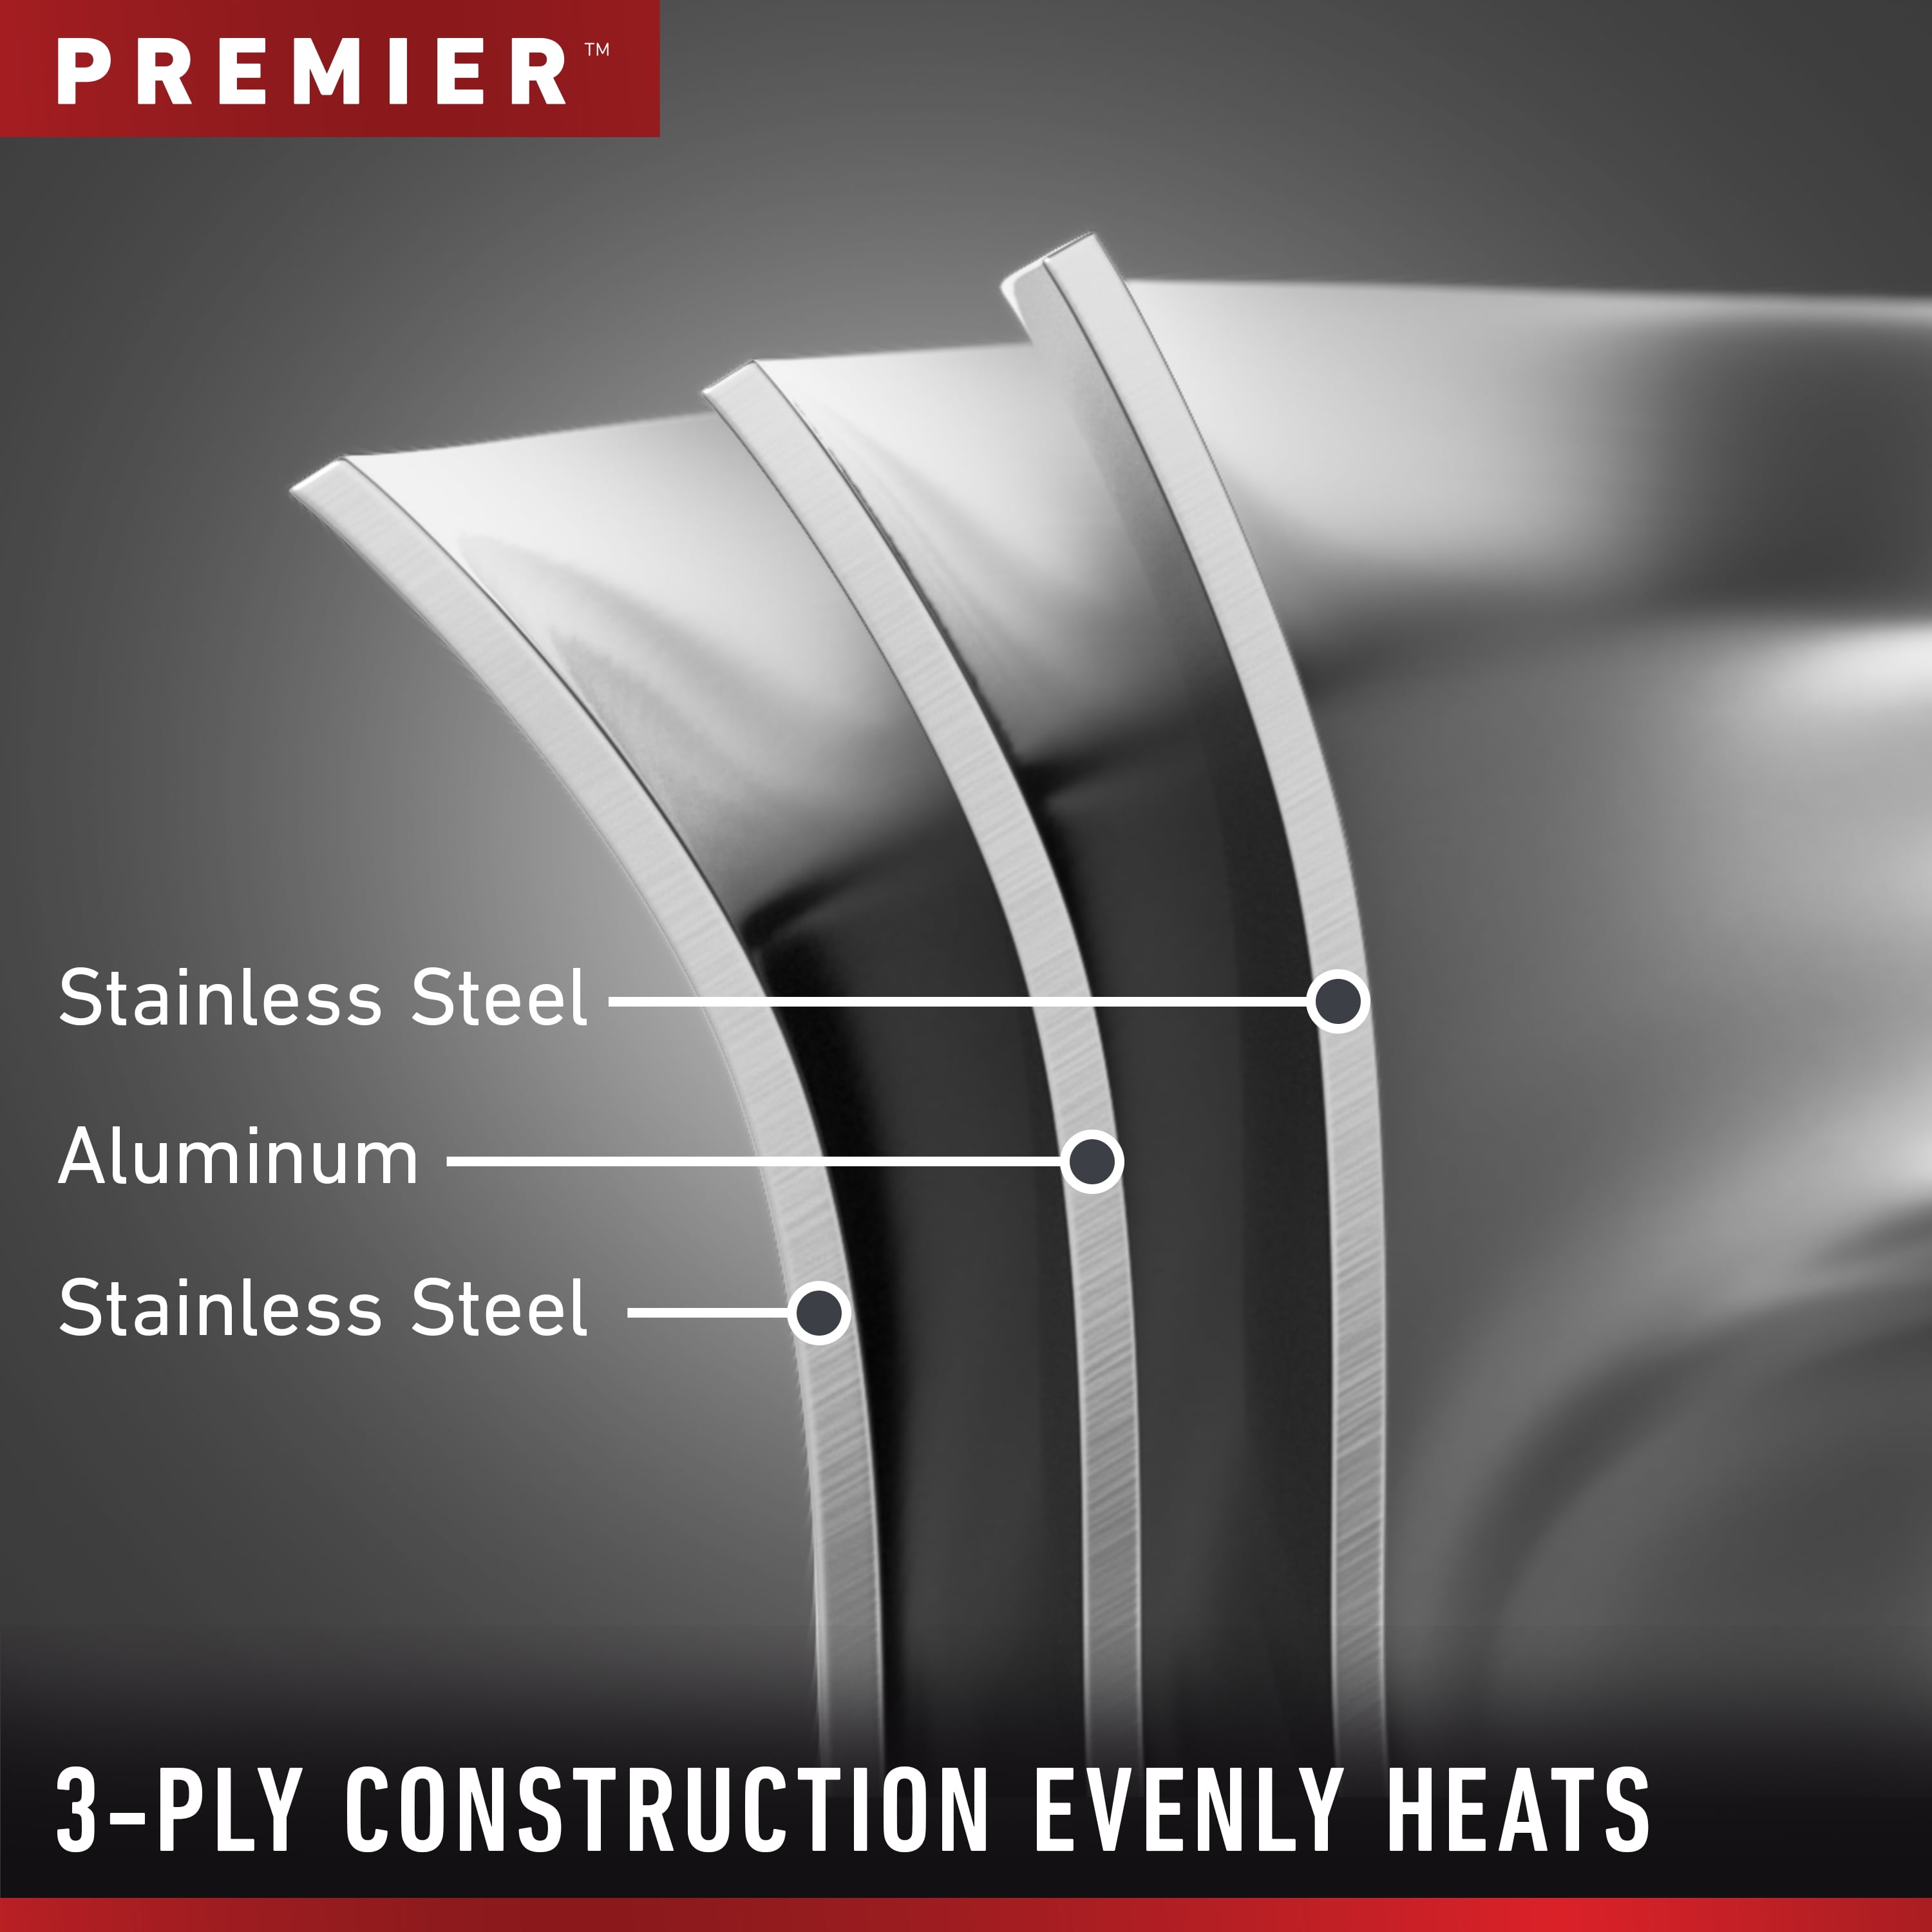 Premier™ Stainless Steel 11-Piece Set